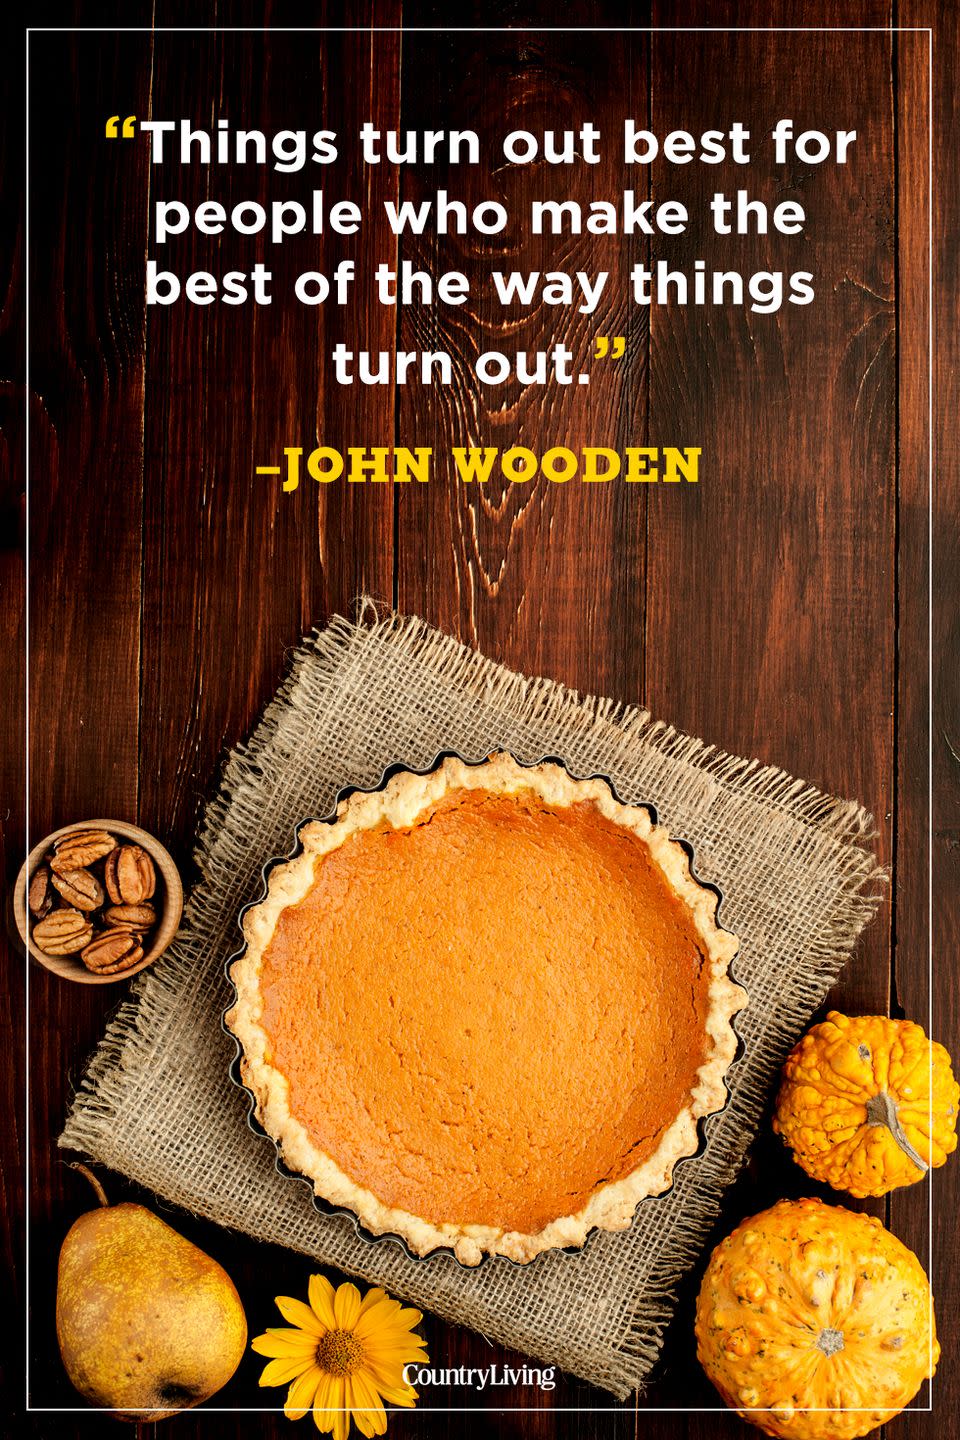 74) John Wooden